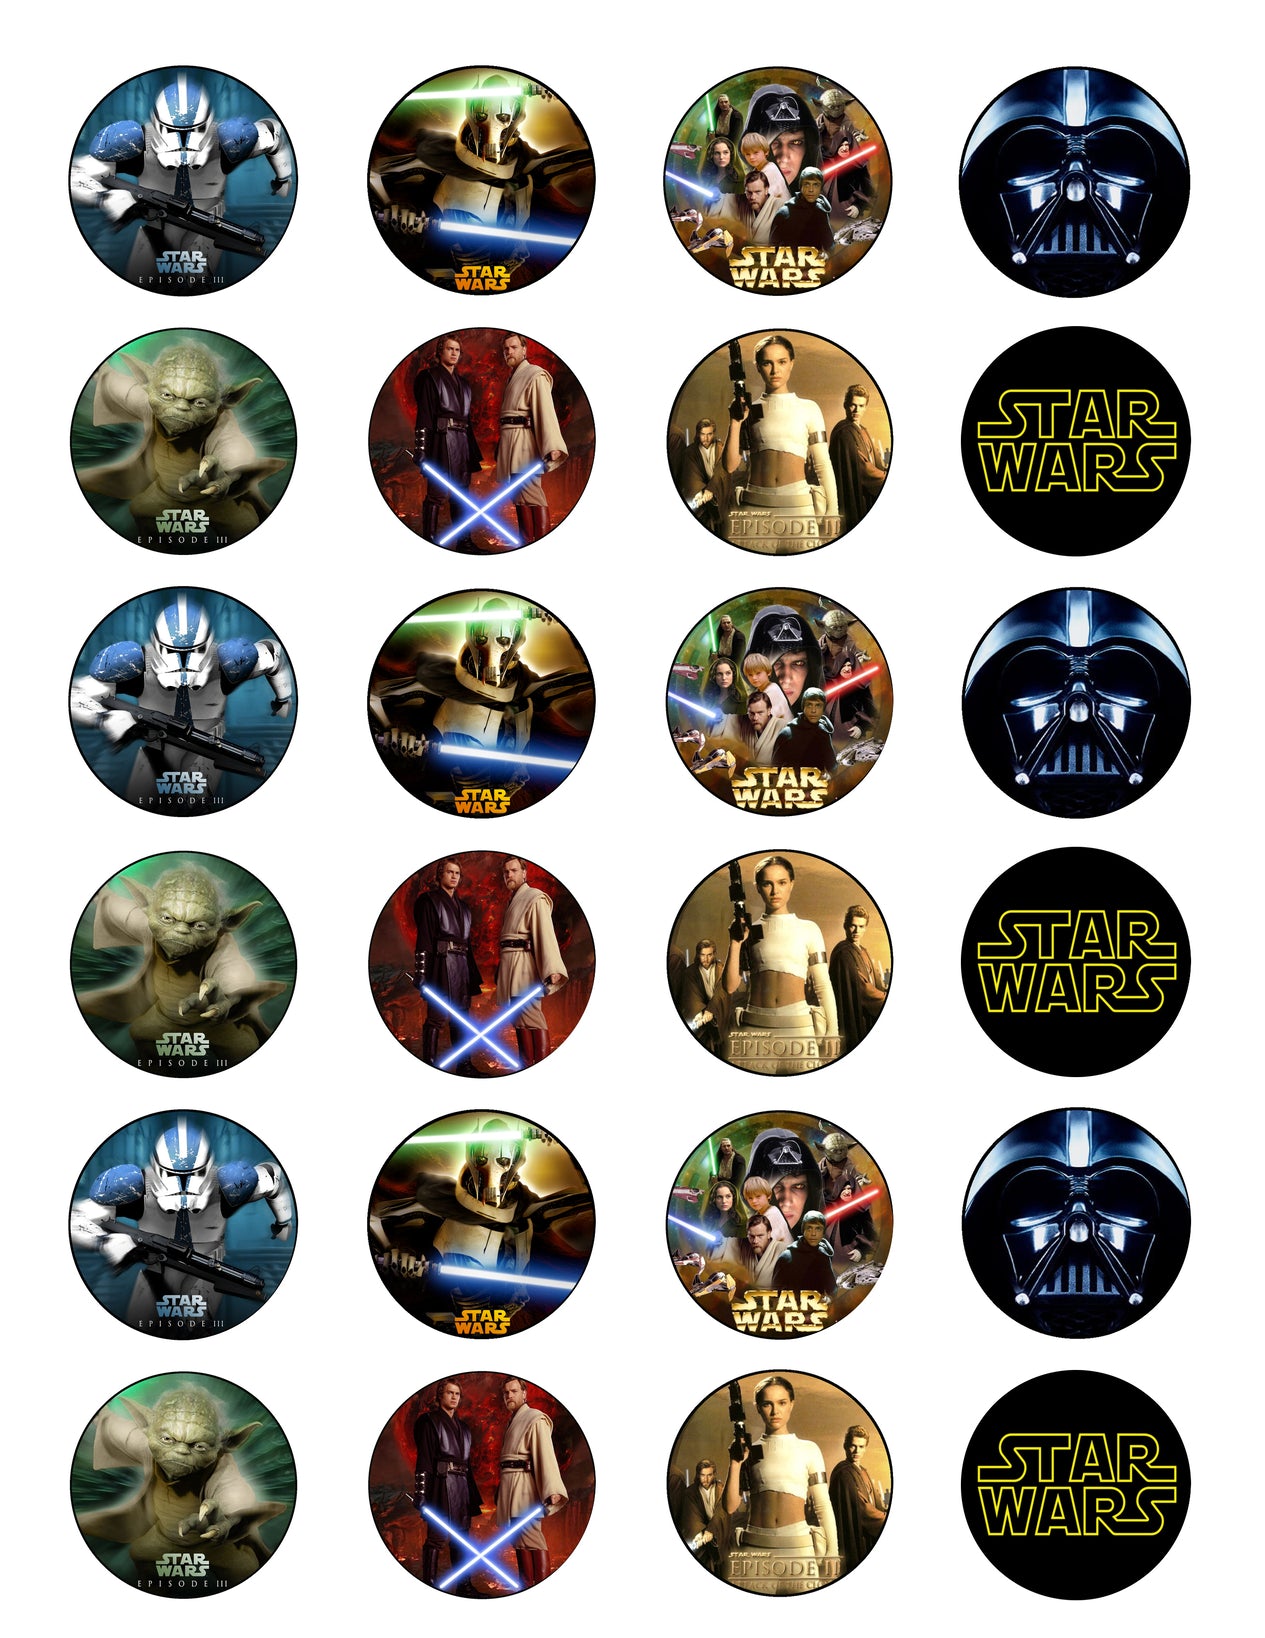 Star Wars Darth Vader Anakin Skywalker Yoda Edible Cupcake Topper Images ABPID09027